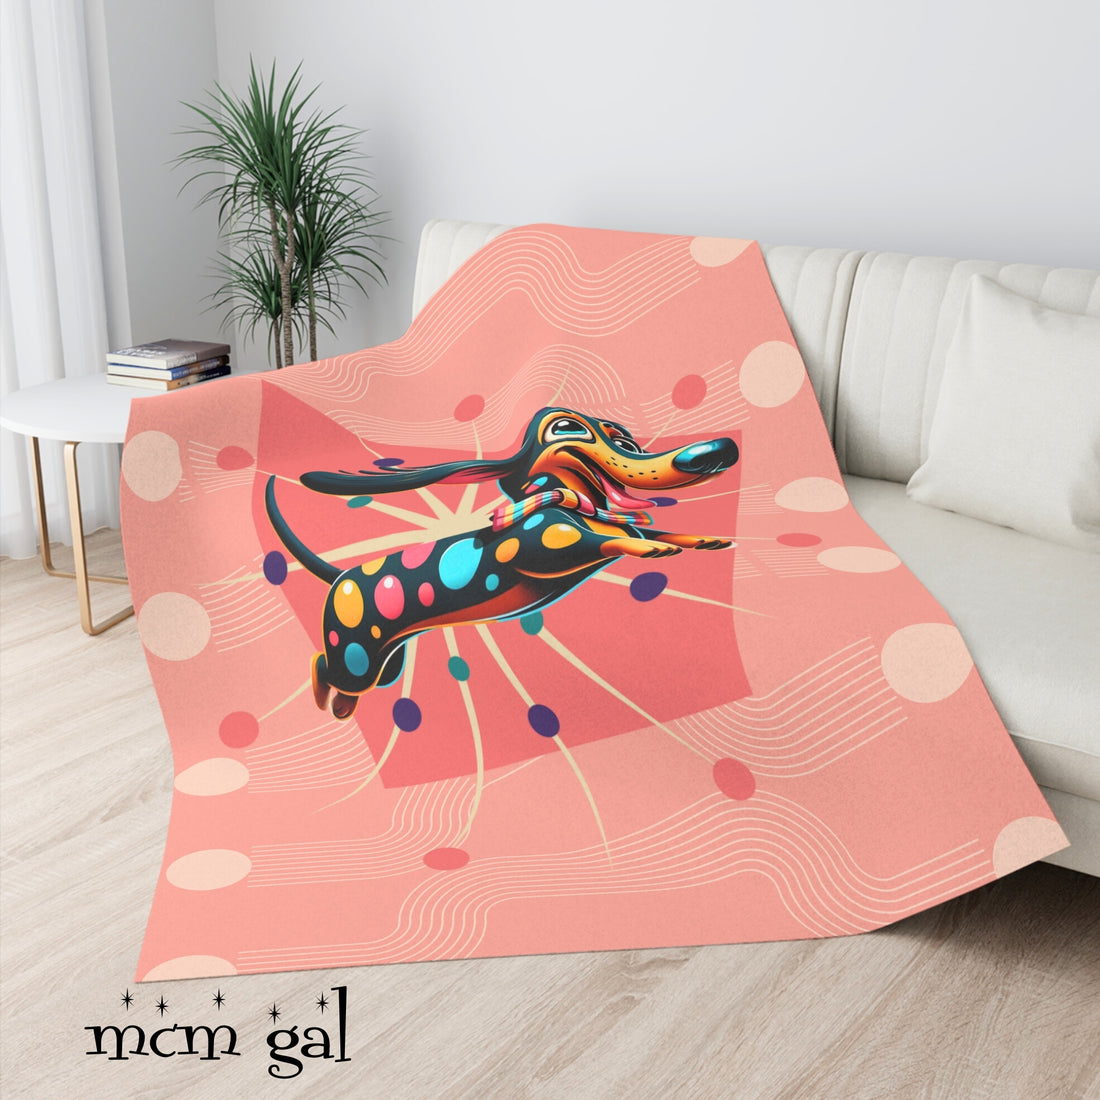 Doxie Dog Blanket, Weiner Dog Lover, Mid Century Modern Coral Pink, Whimsical Mid Century Mod  Dachshund Dog Lover Sherpa Fleece Blanket